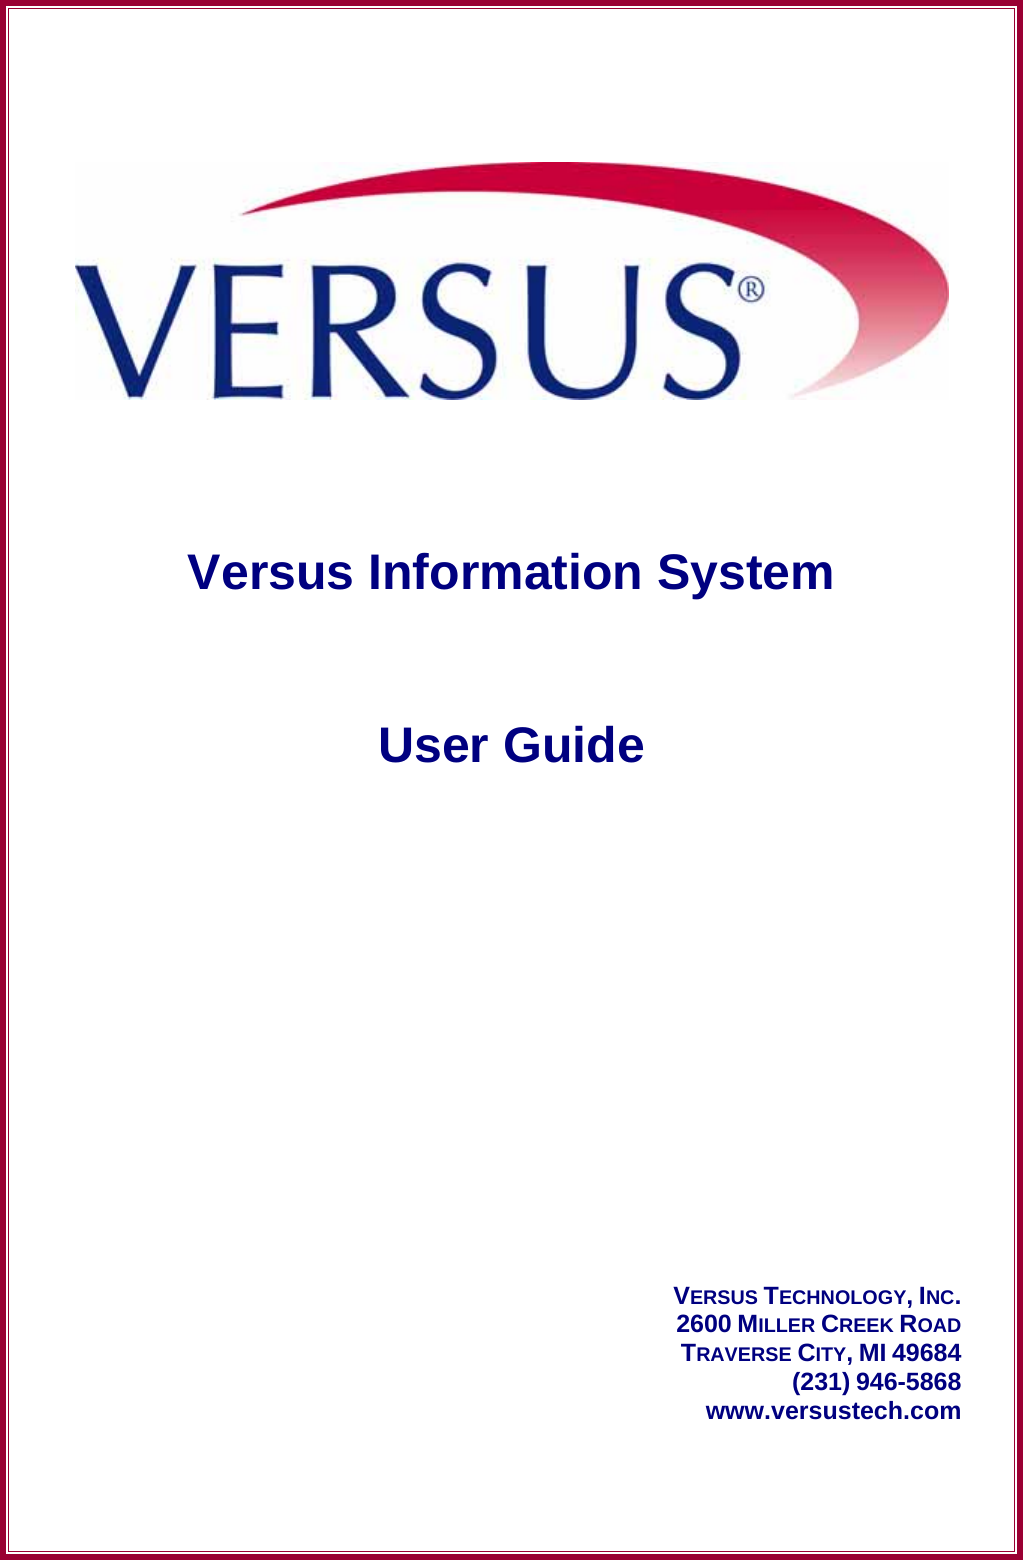         Versus Information System   User Guide                 VERSUS TECHNOLOGY, INC. 2600 MILLER CREEK ROAD TRAVERSE CITY, MI 49684 (231) 946-5868 www.versustech.com